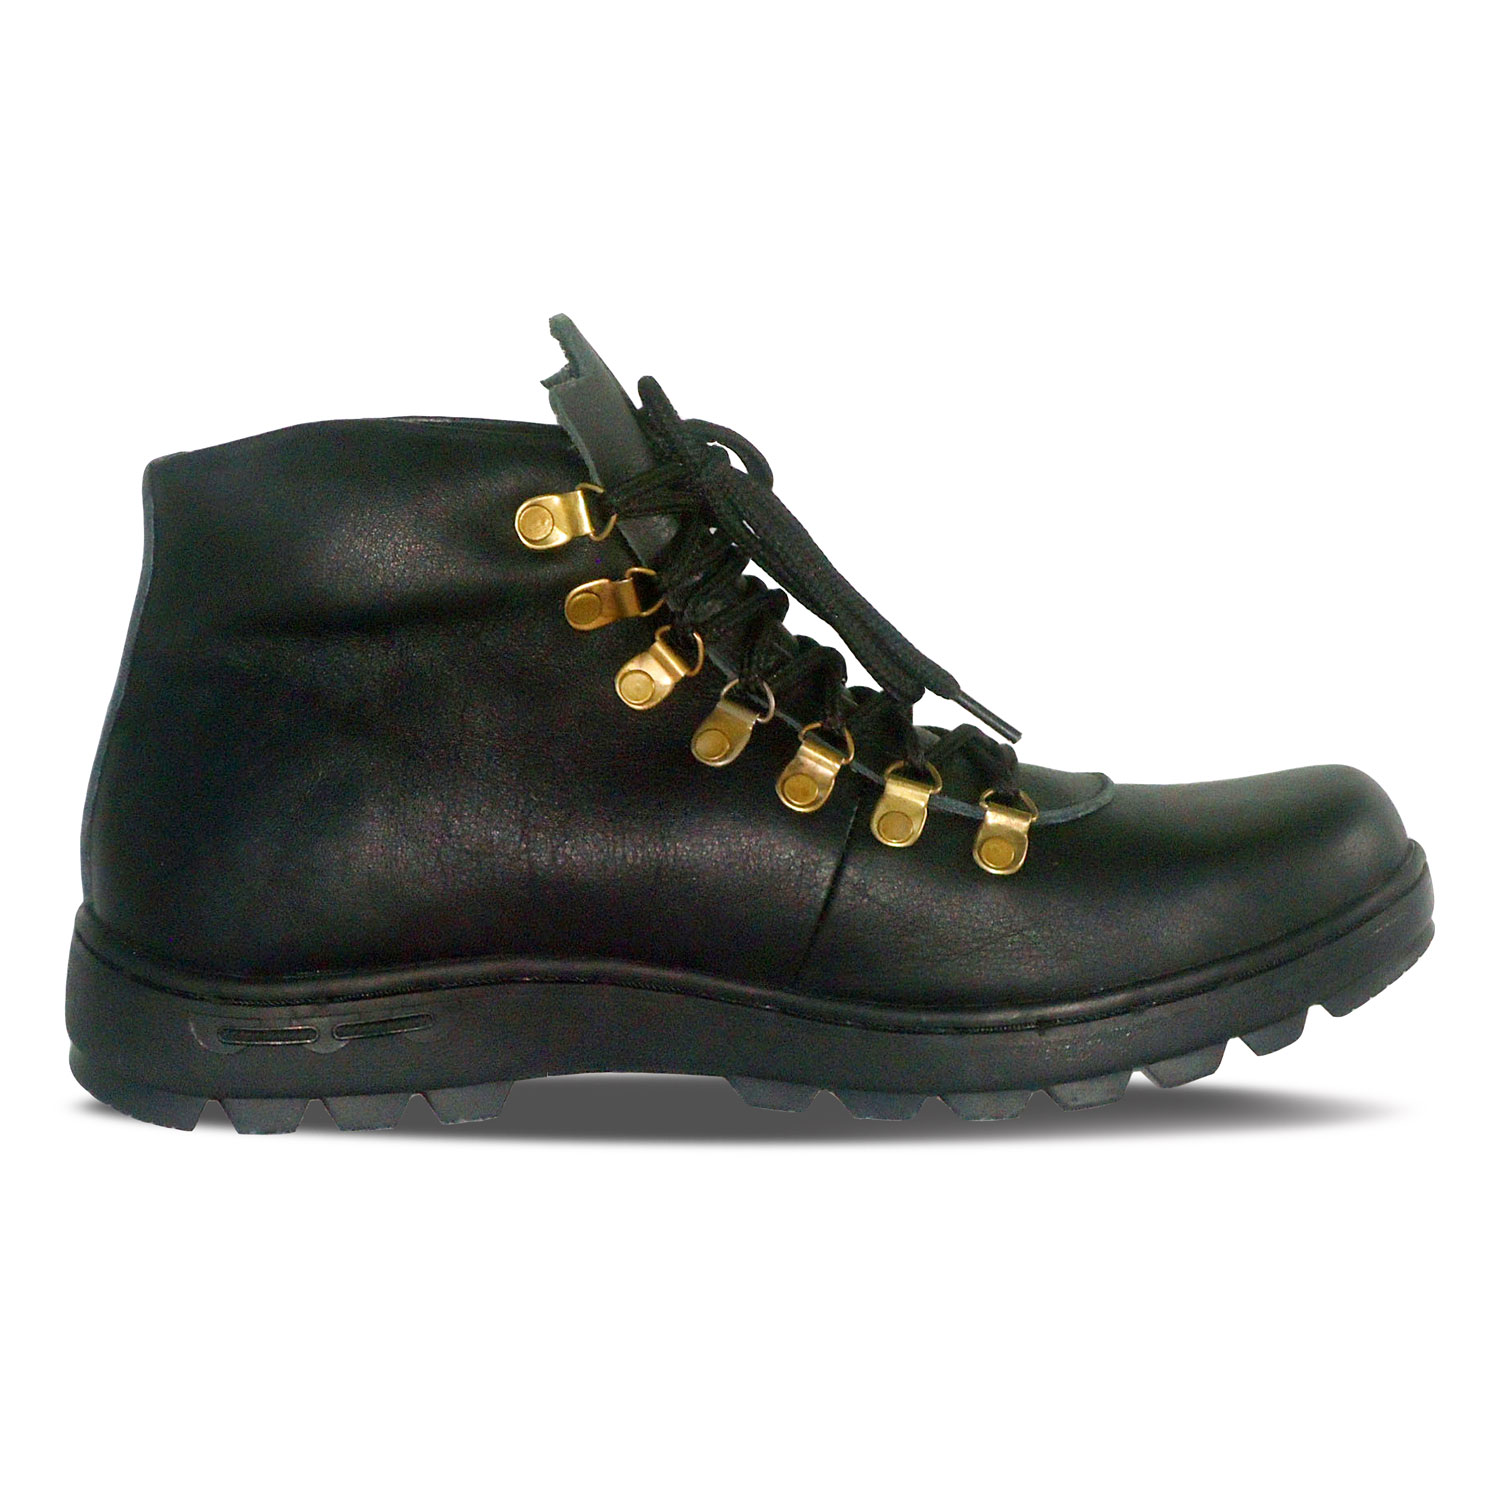 sepatu kulit pria boots B02 black - in - atmal